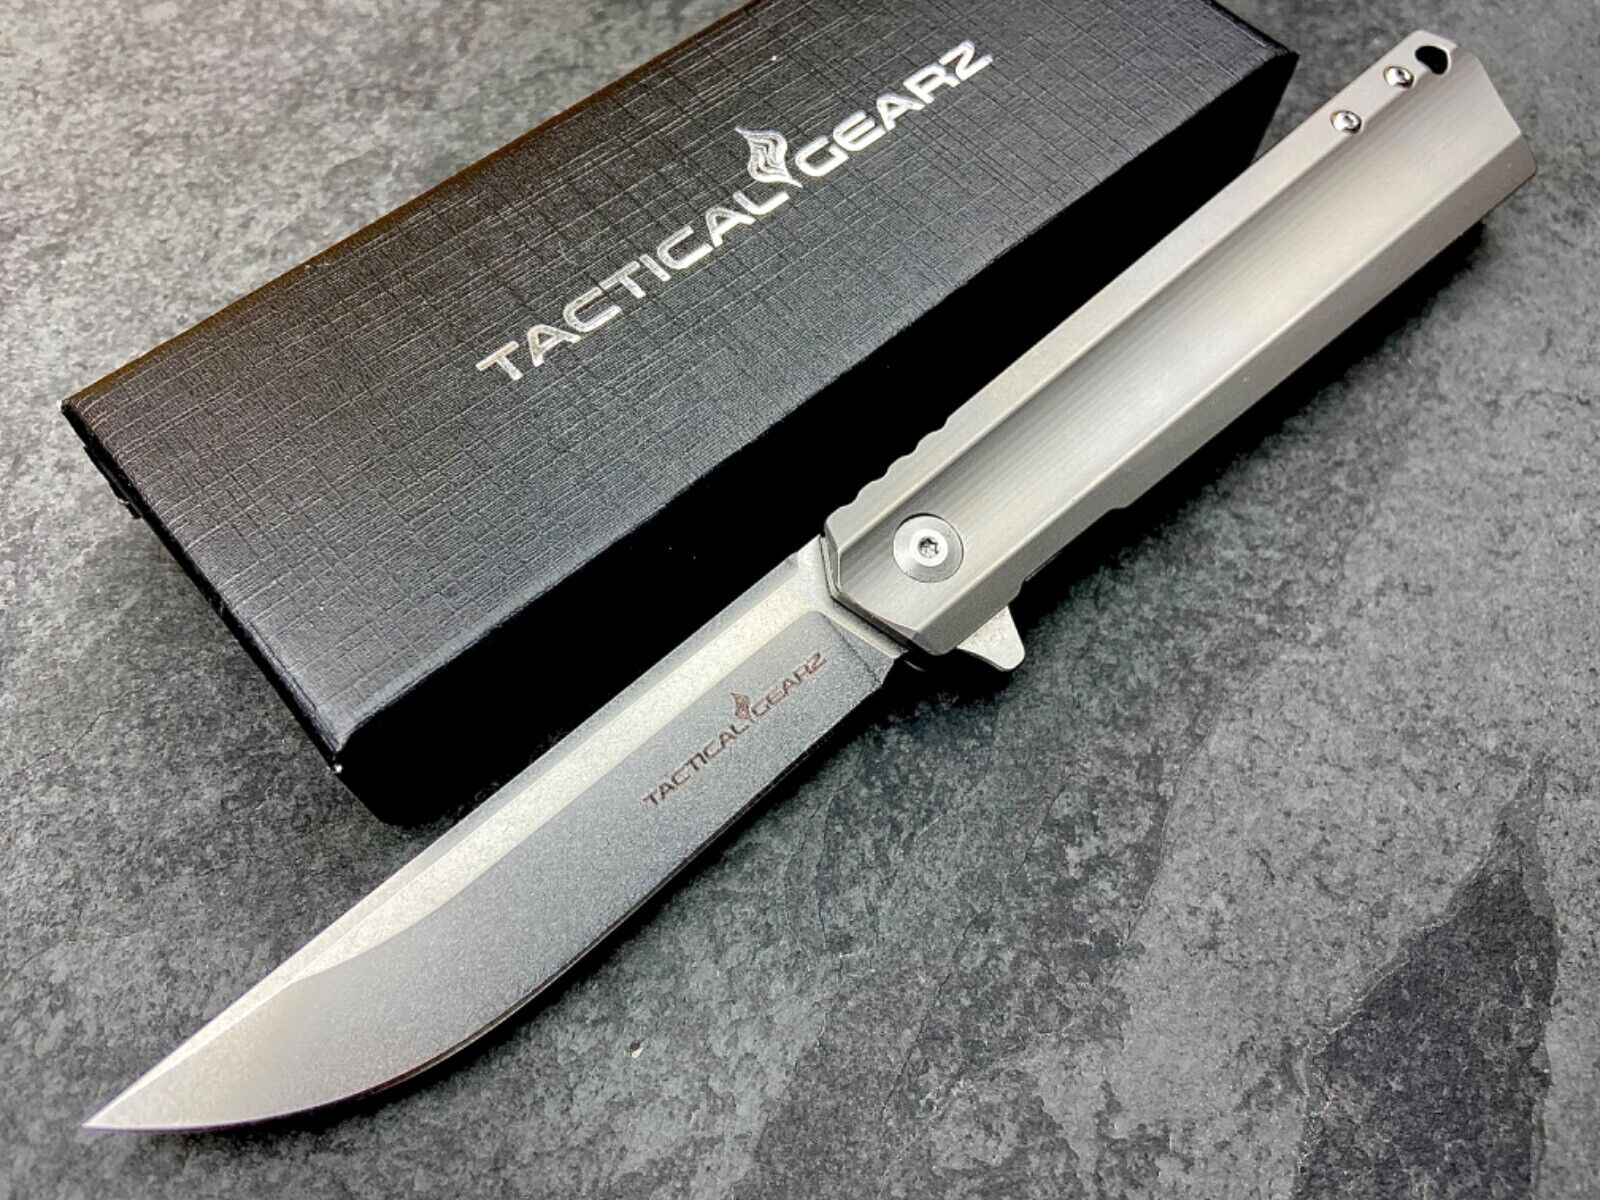 Solid Tc4 Titanium EDC Pocket Knife Razor Sharp D2 Steel Blade Ball Bearings